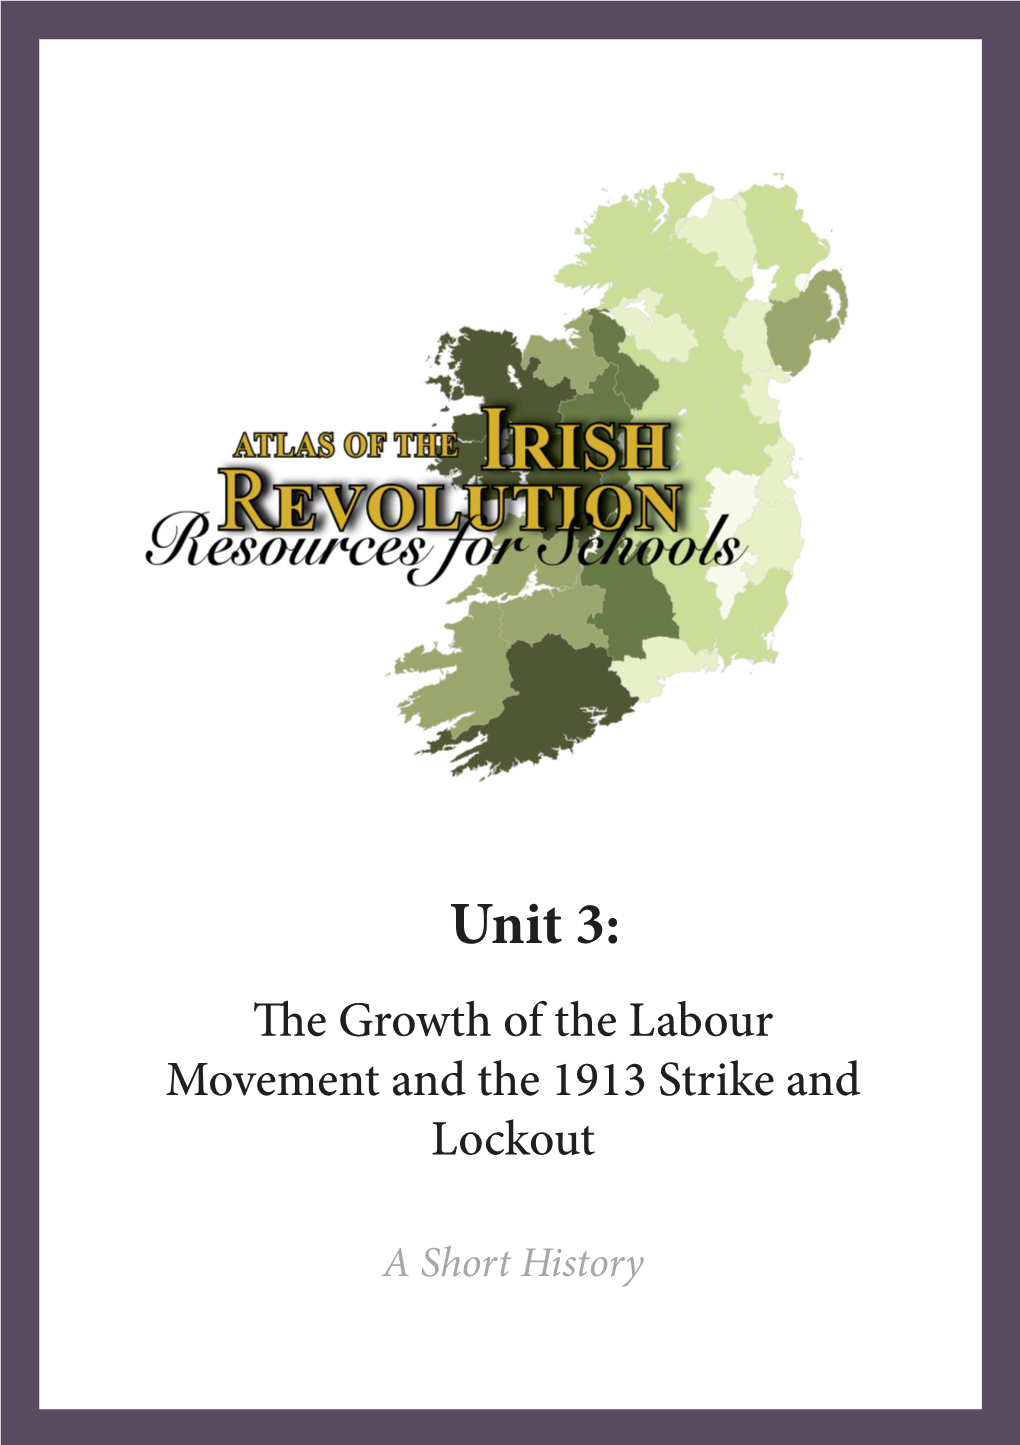 A Short History of the Irish Labour Movement